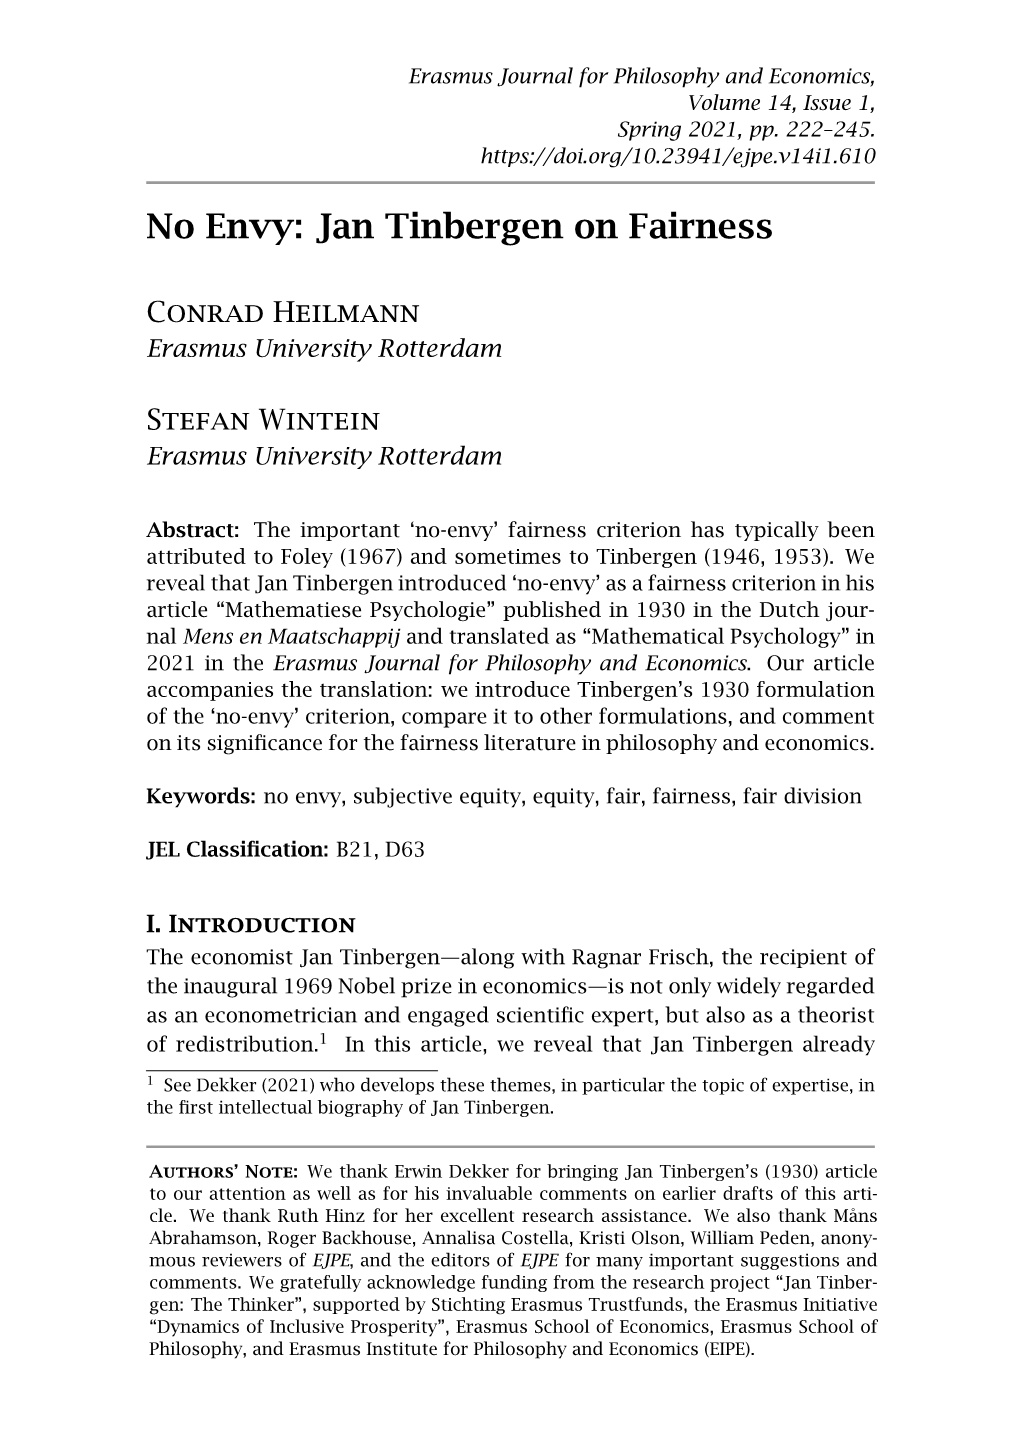 Jan Tinbergen on Fairness